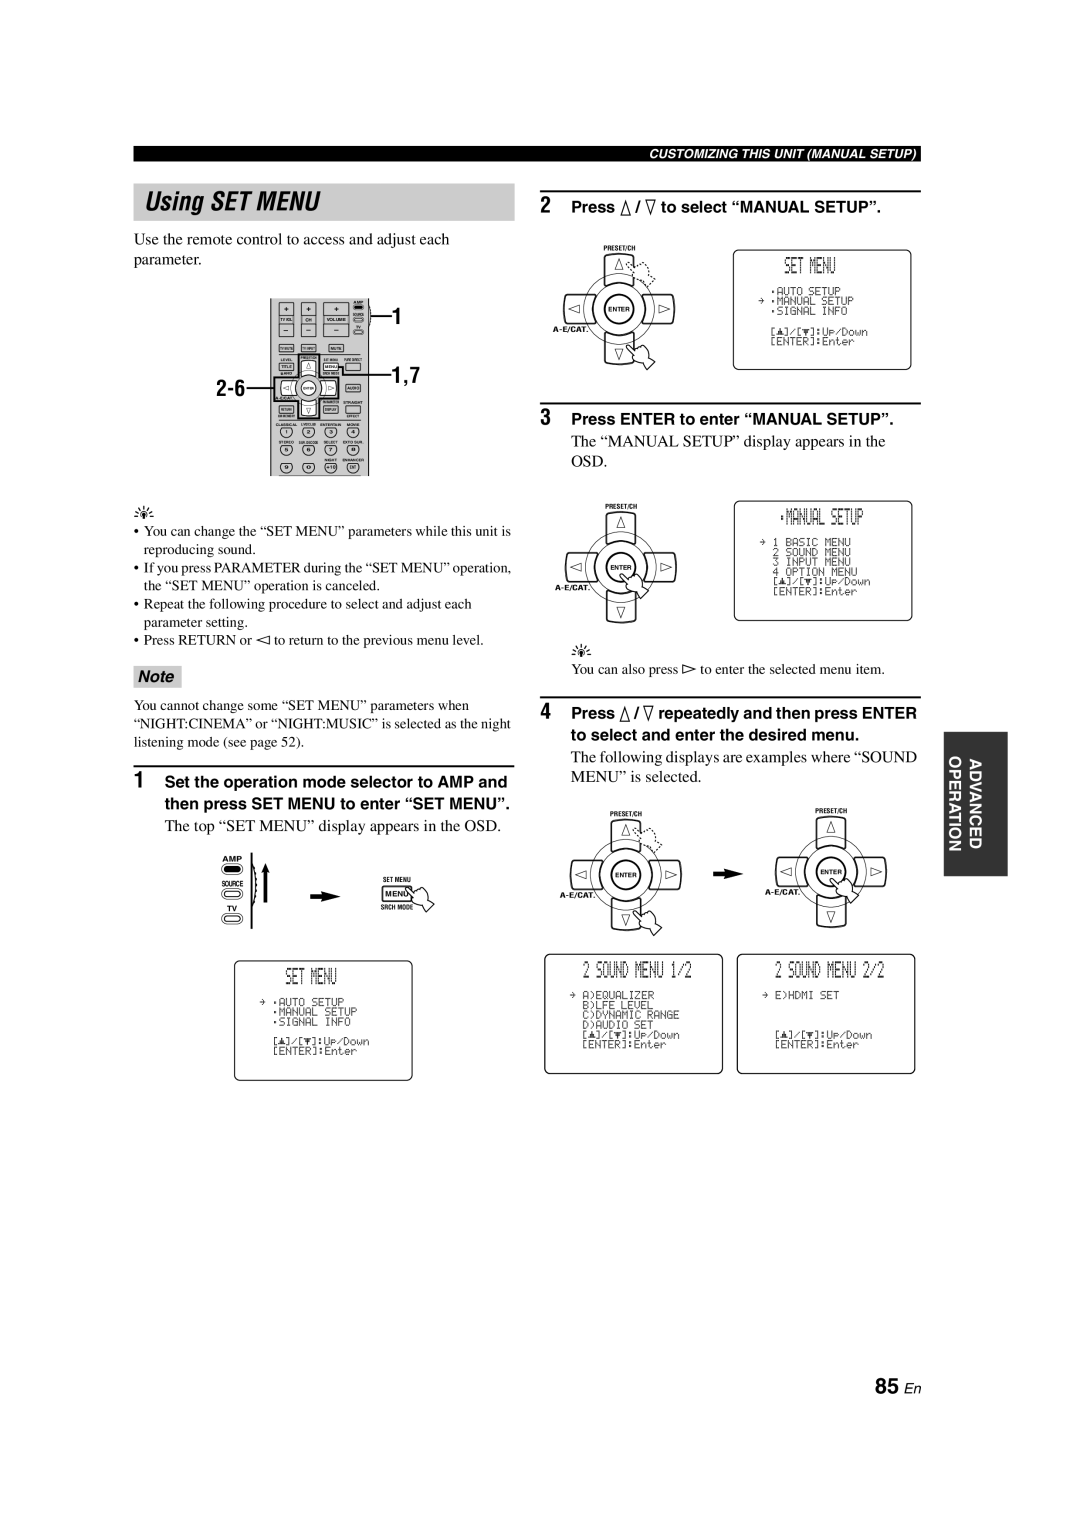 Yamaha HTR-6090 owner manual Using SET MENU, 85 En, Manual Setup, SOUND MENU 1/2, Set Menu 